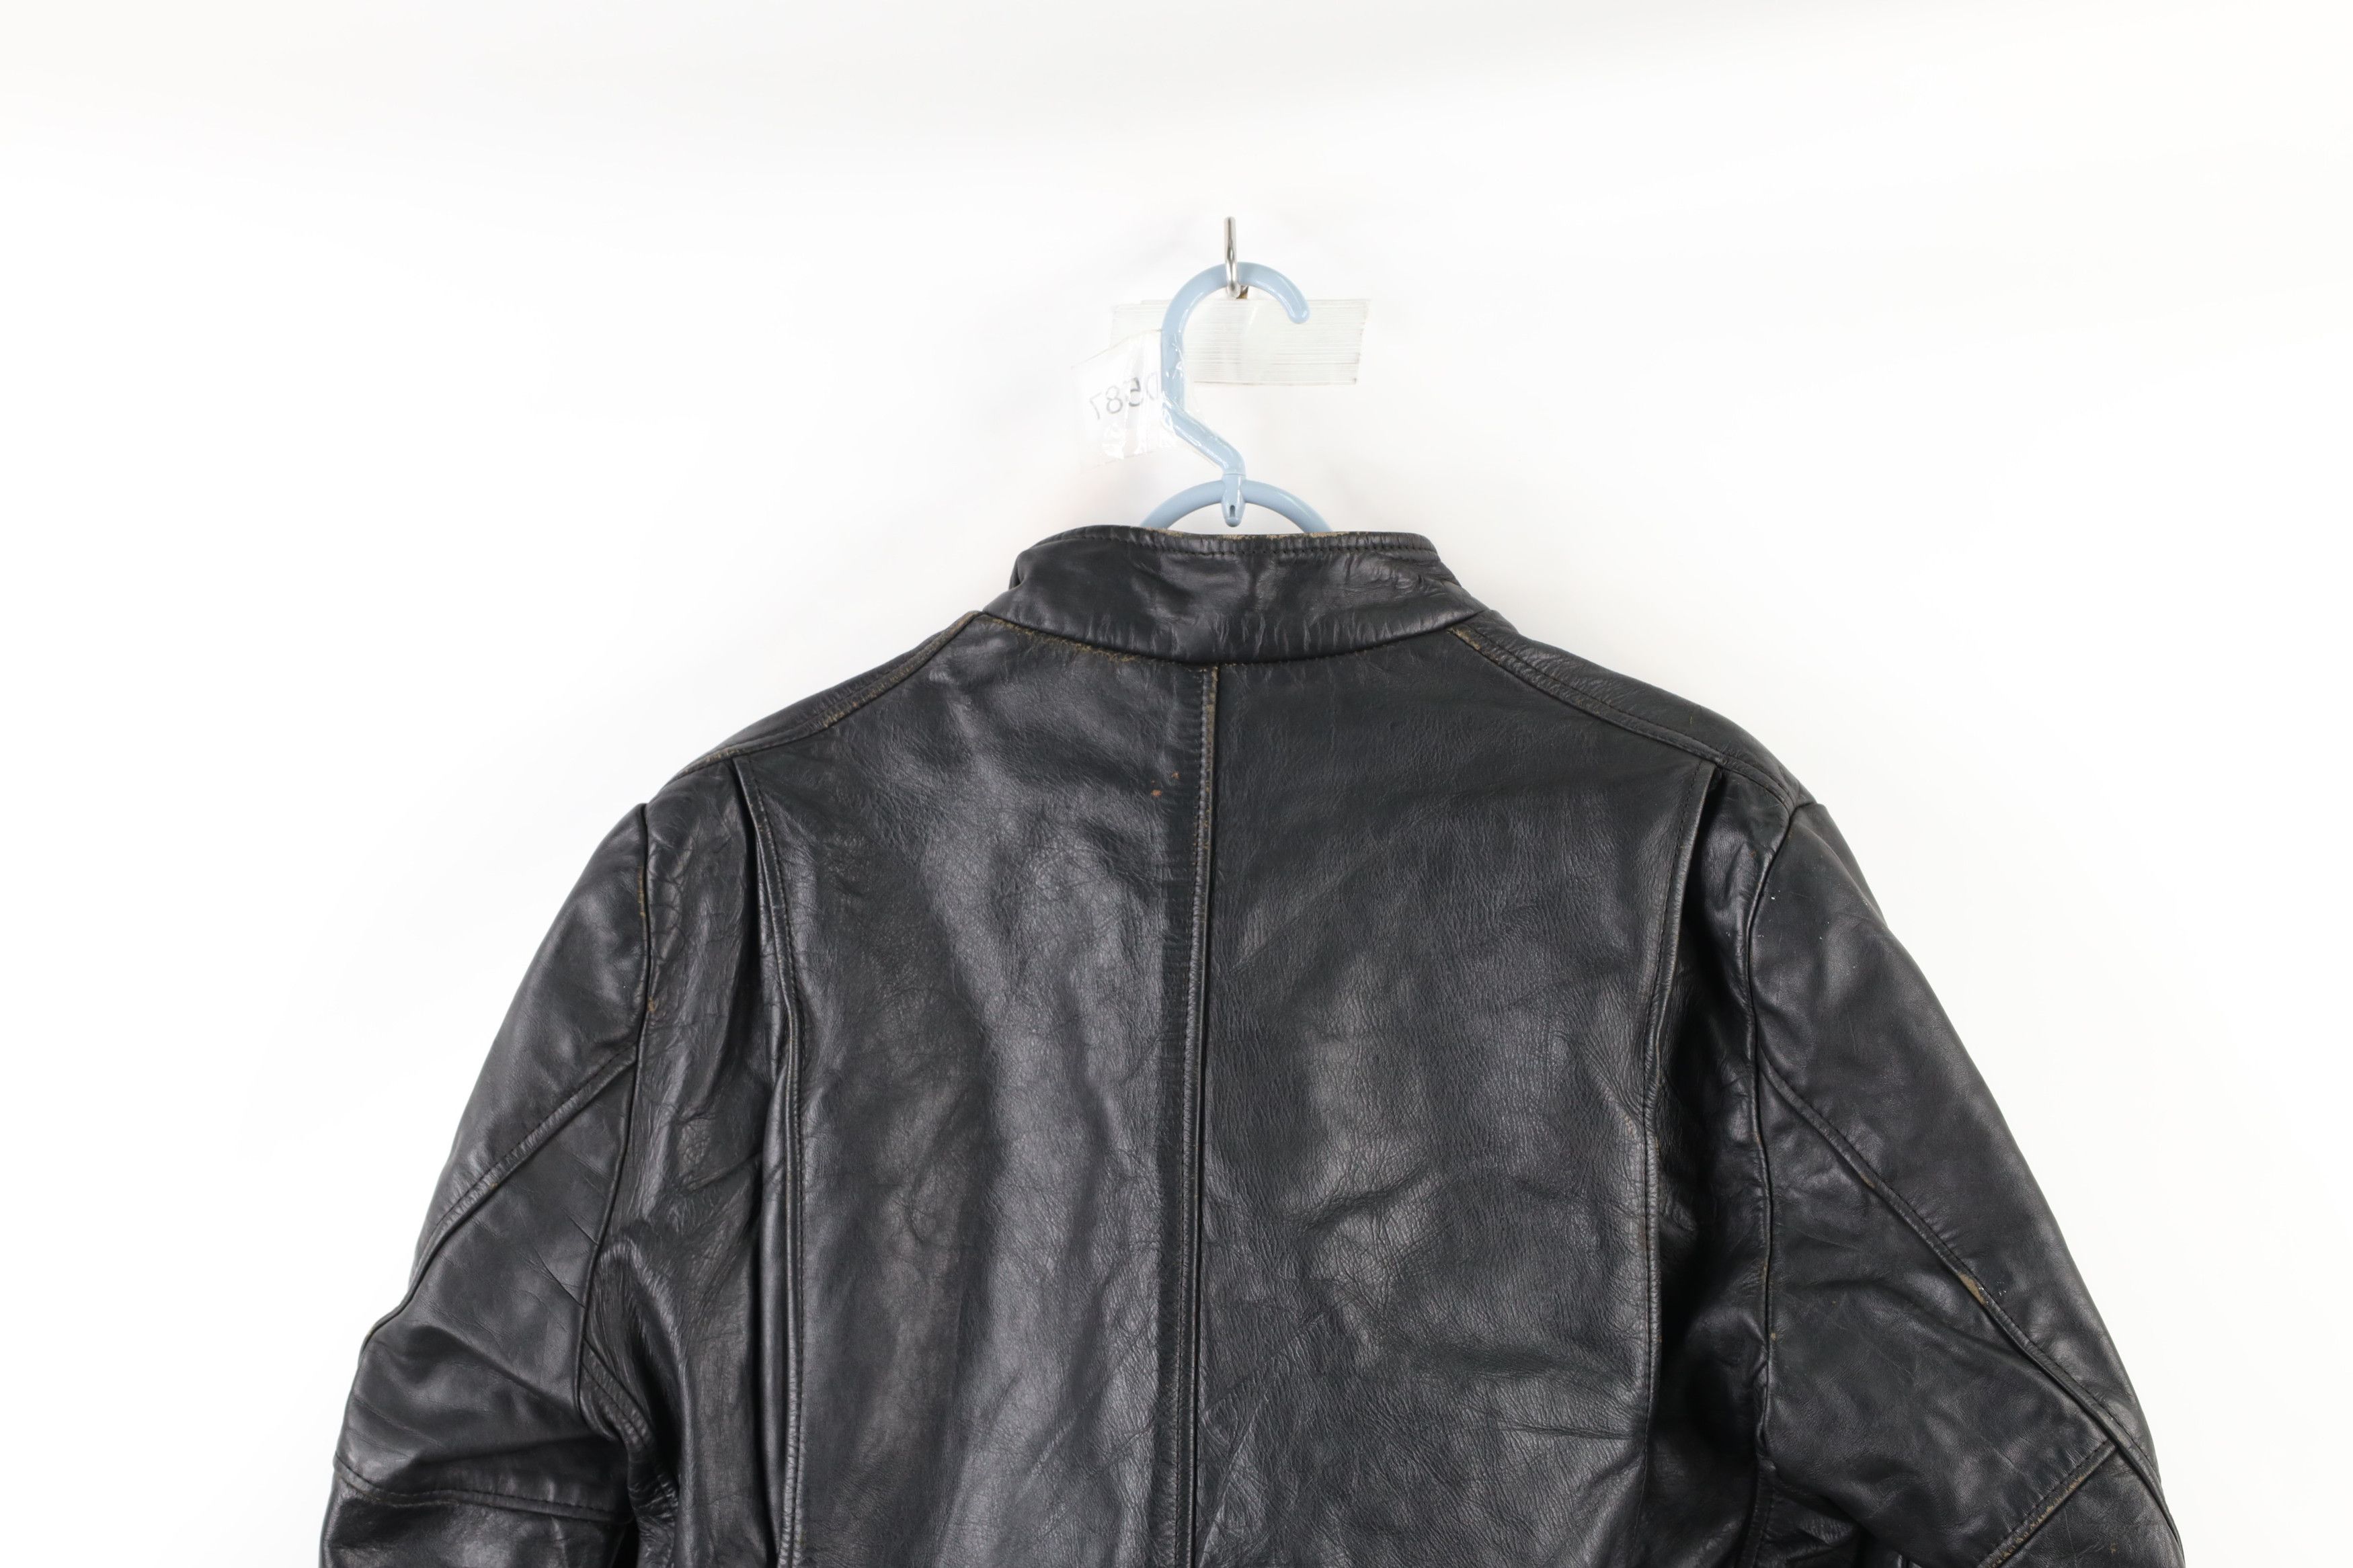 Vintage Vintage 70s Leather Cafe Racer Motorcycle Jacket Black USA Size US L / EU 52-54 / 3 - 16 Thumbnail